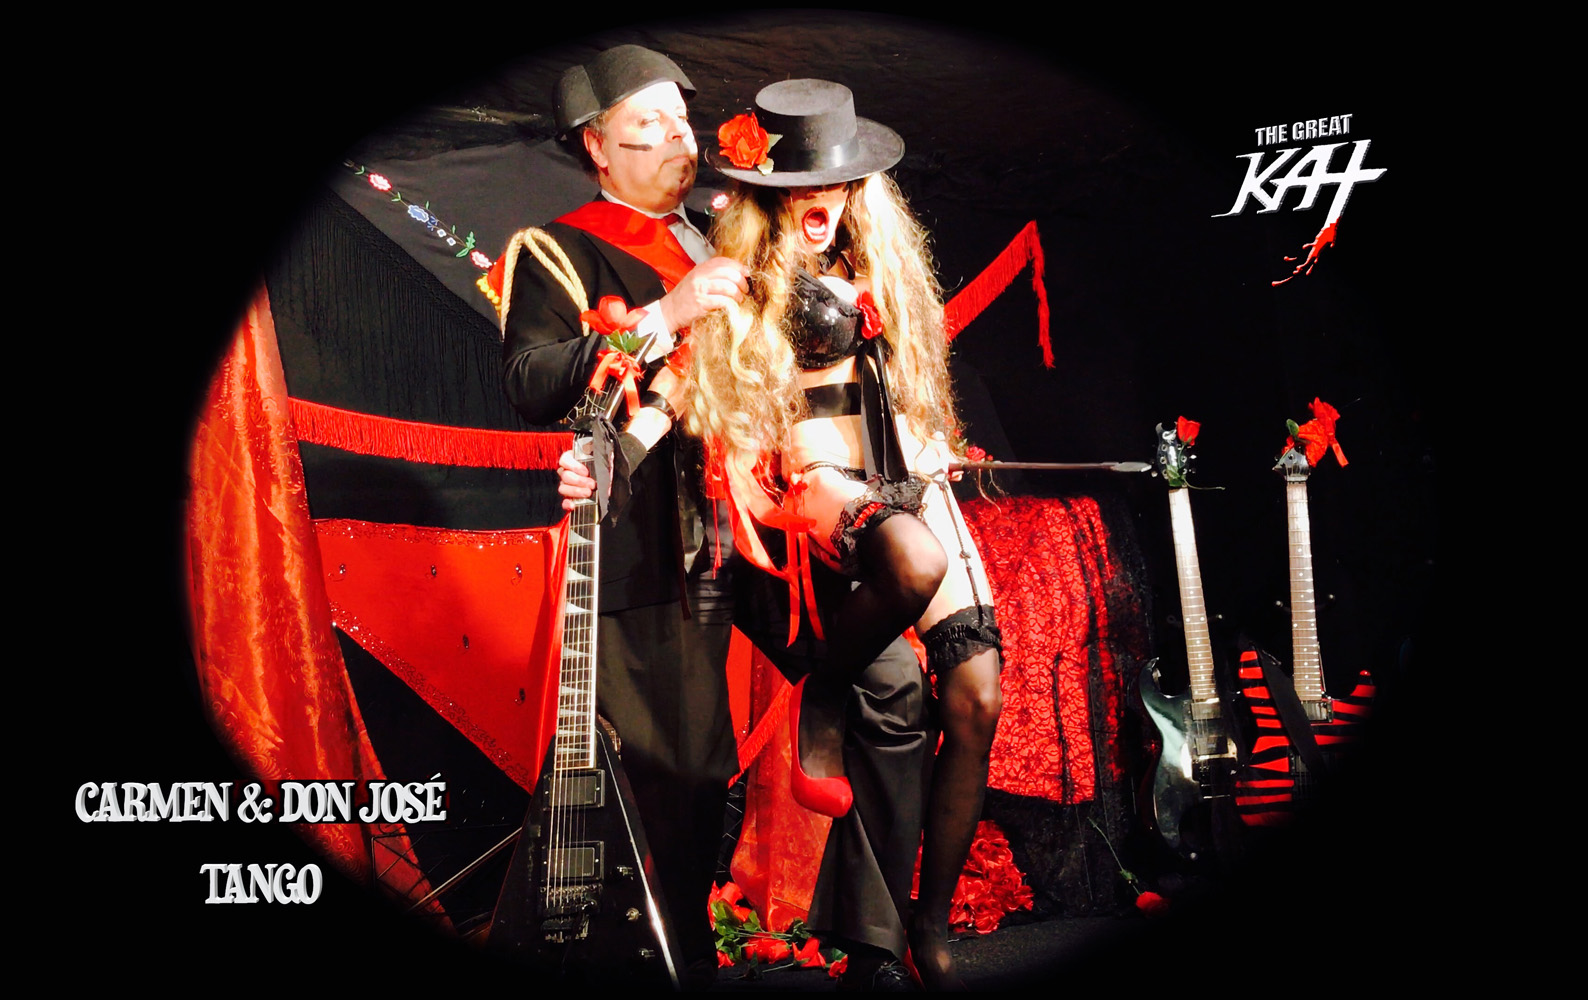 Carmen & Don Jos! TANGO! From The Great Kat's SARASATE'S "CARMEN FANTASY" MUSIC VIDEO!! 